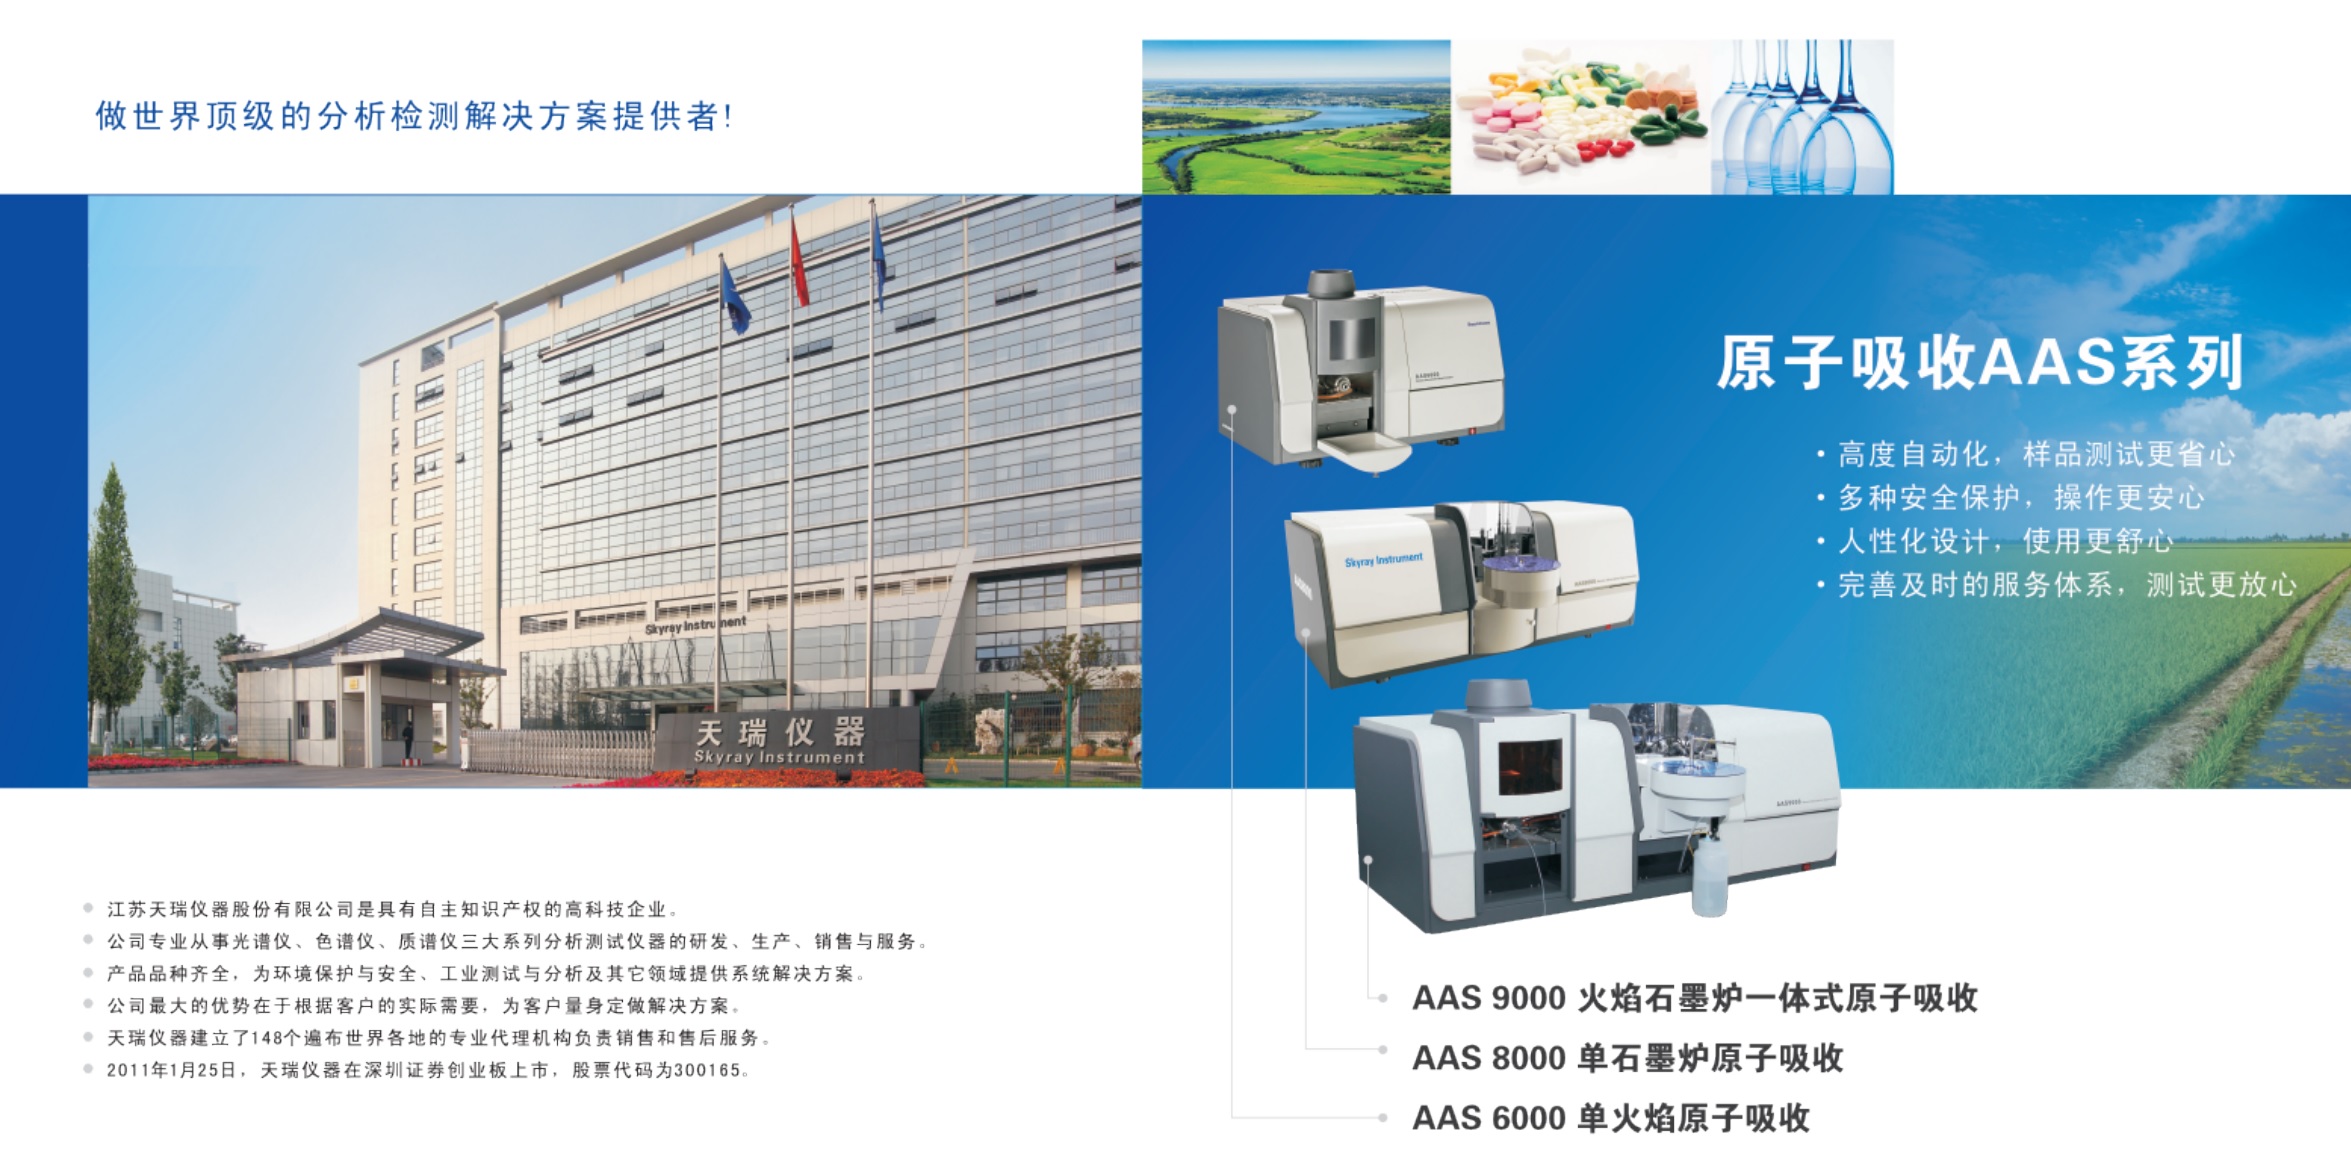 Jiangsu Skyray Instrument Co., Ltd.-Atomic absorption spectrophotometer AAS6000 AAS8000 AAS9000 series